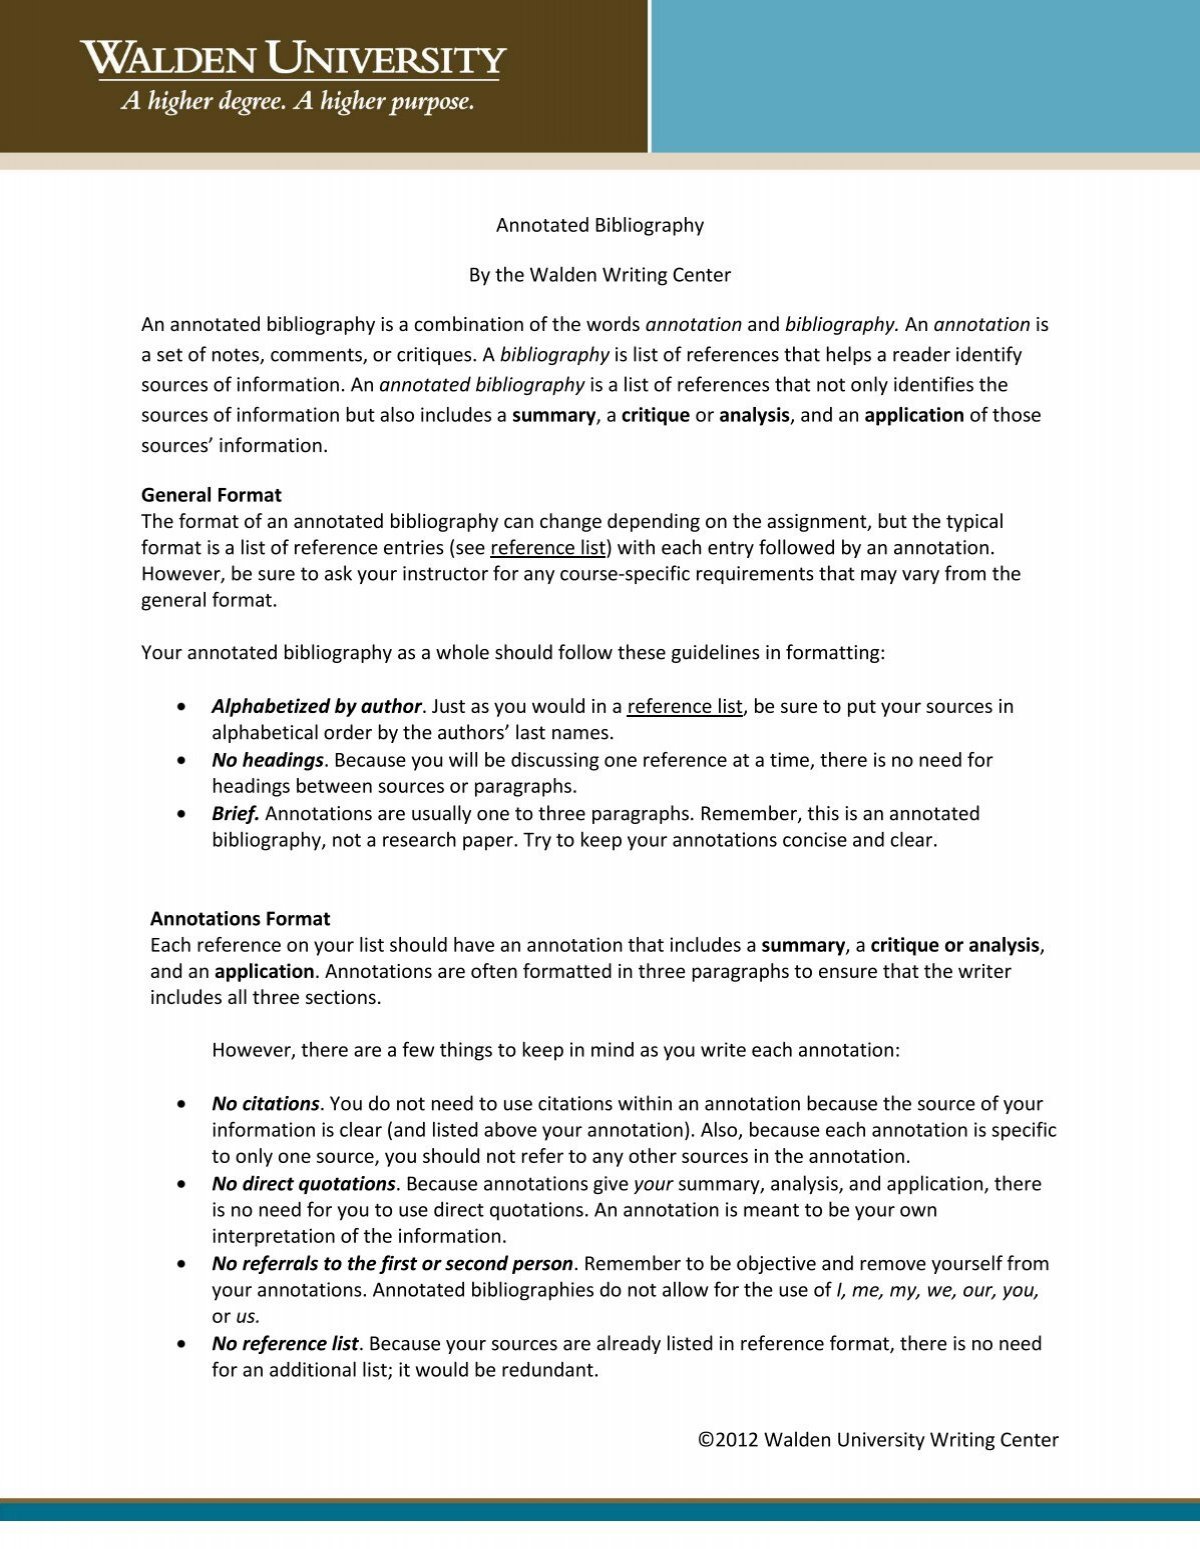 walden university dissertation template